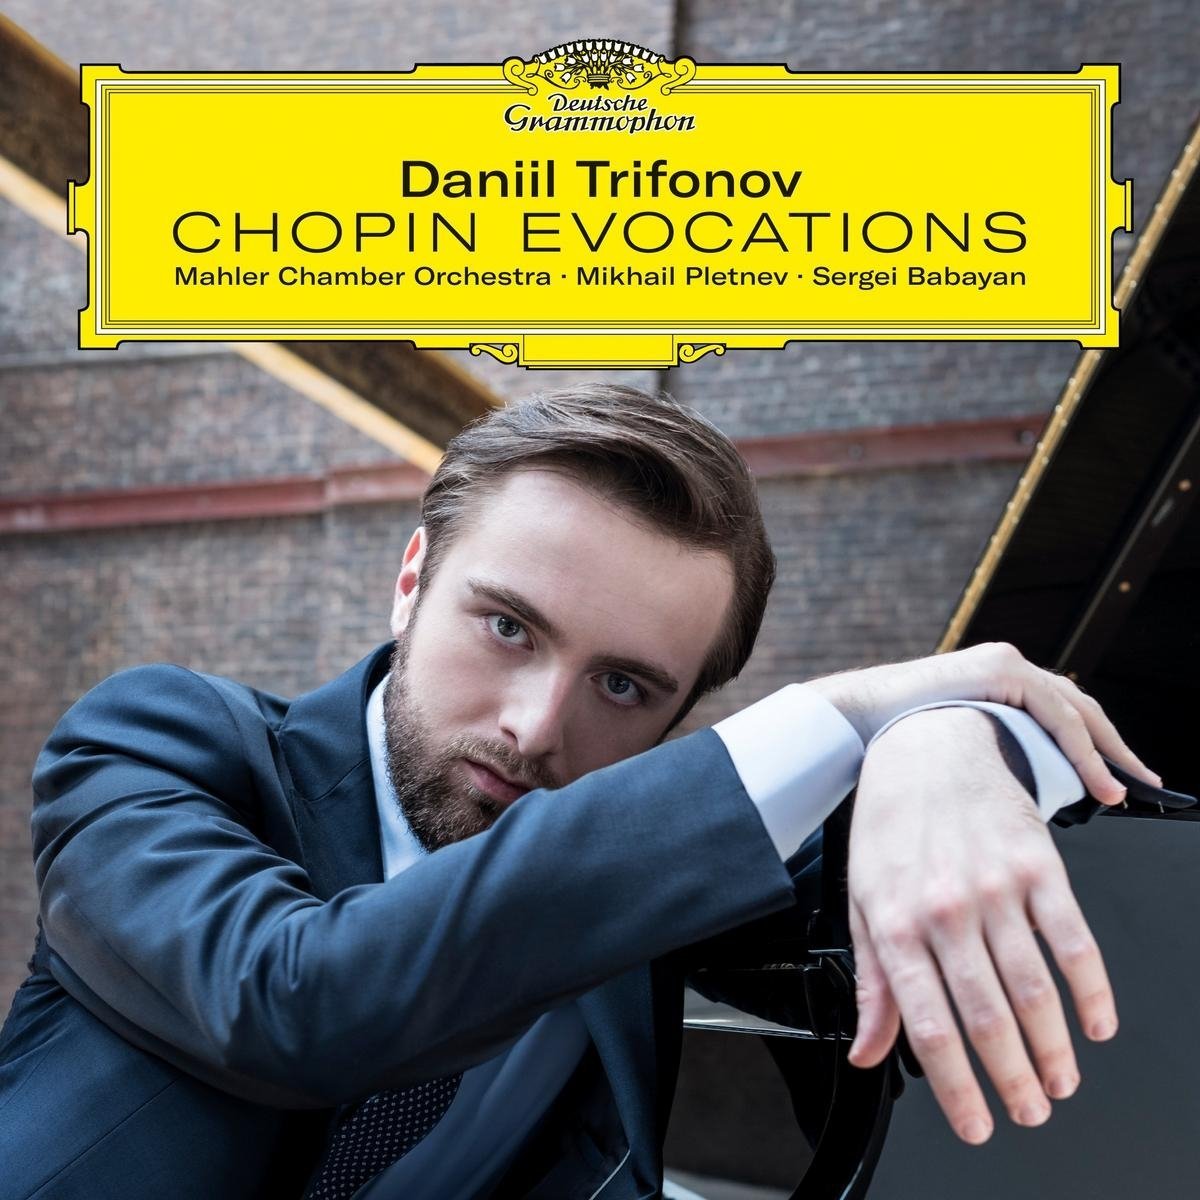 Chopin Evocations | Mikhail Pletnev, Daniil Trifonov, Sergei Babayan, Mahler Chamber Orchestra